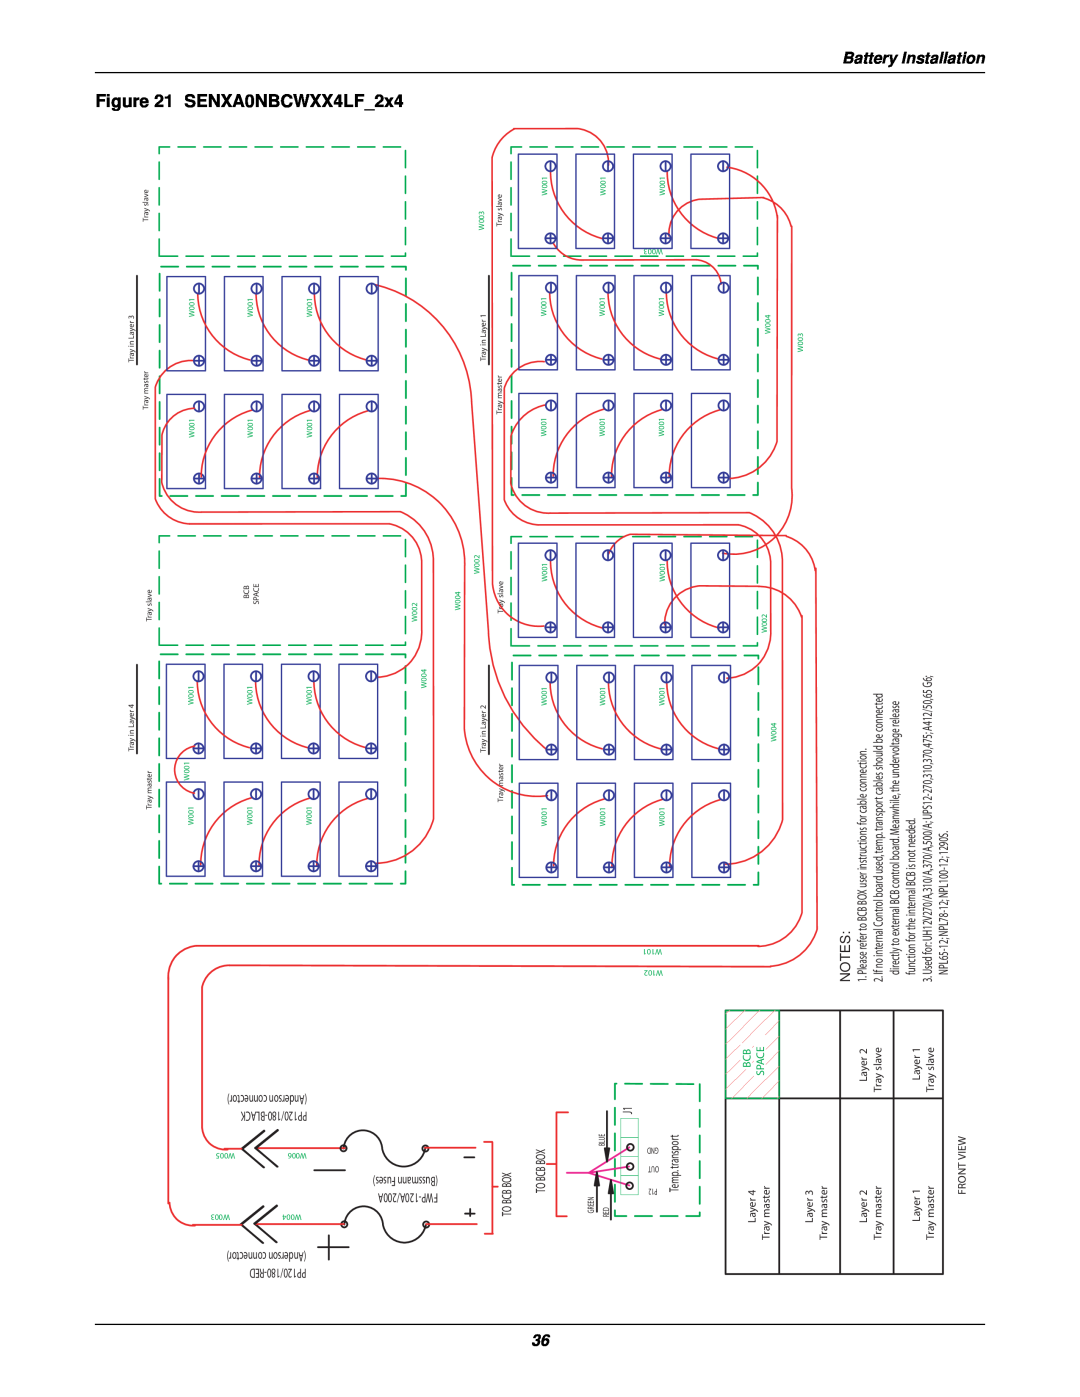 Emerson 50 and 60 Hz SENXA0NBCWXX4LF2x4, PP120/180-RED, PP120/180-BLACK, FWP-120A/200A, Bussmann Fuses, Anderson connector 